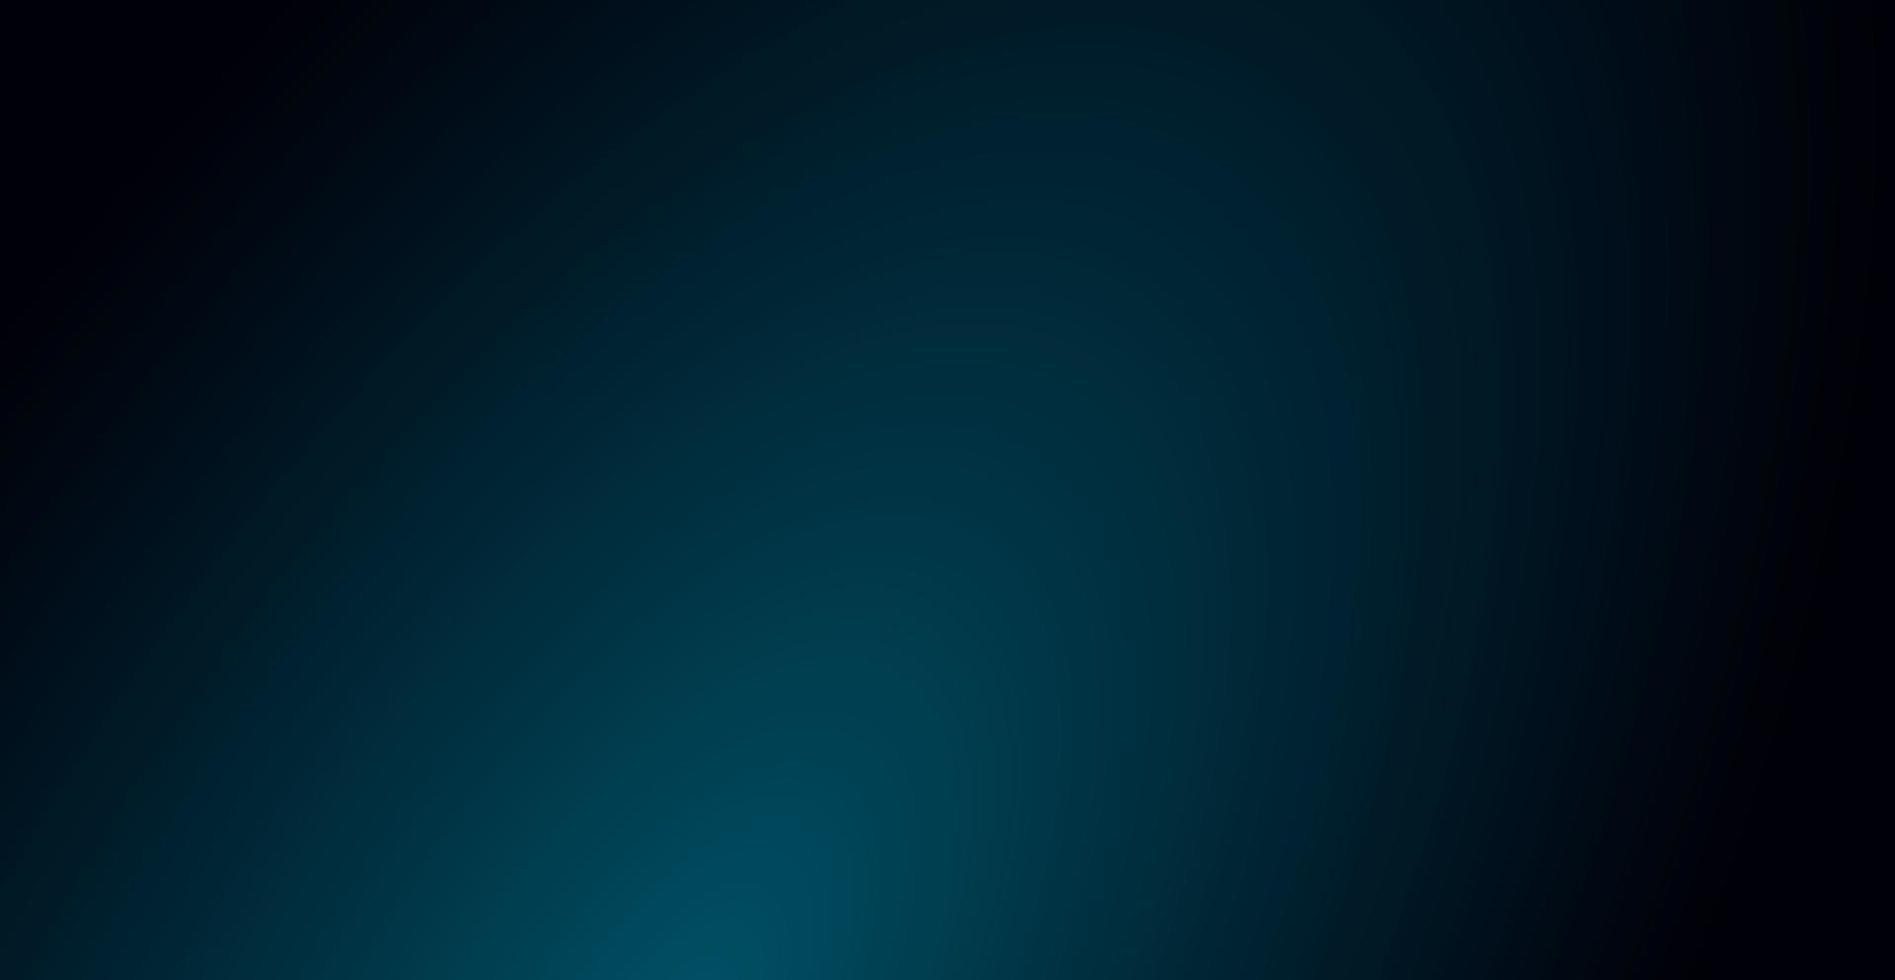 diseño de fondo abstracto de vector degradado azul oscuro moderno y fondo  de pantalla de ilustración abstracta de color azul oscuro, patrón,  plantilla de cubierta 7531417 Vector en Vecteezy